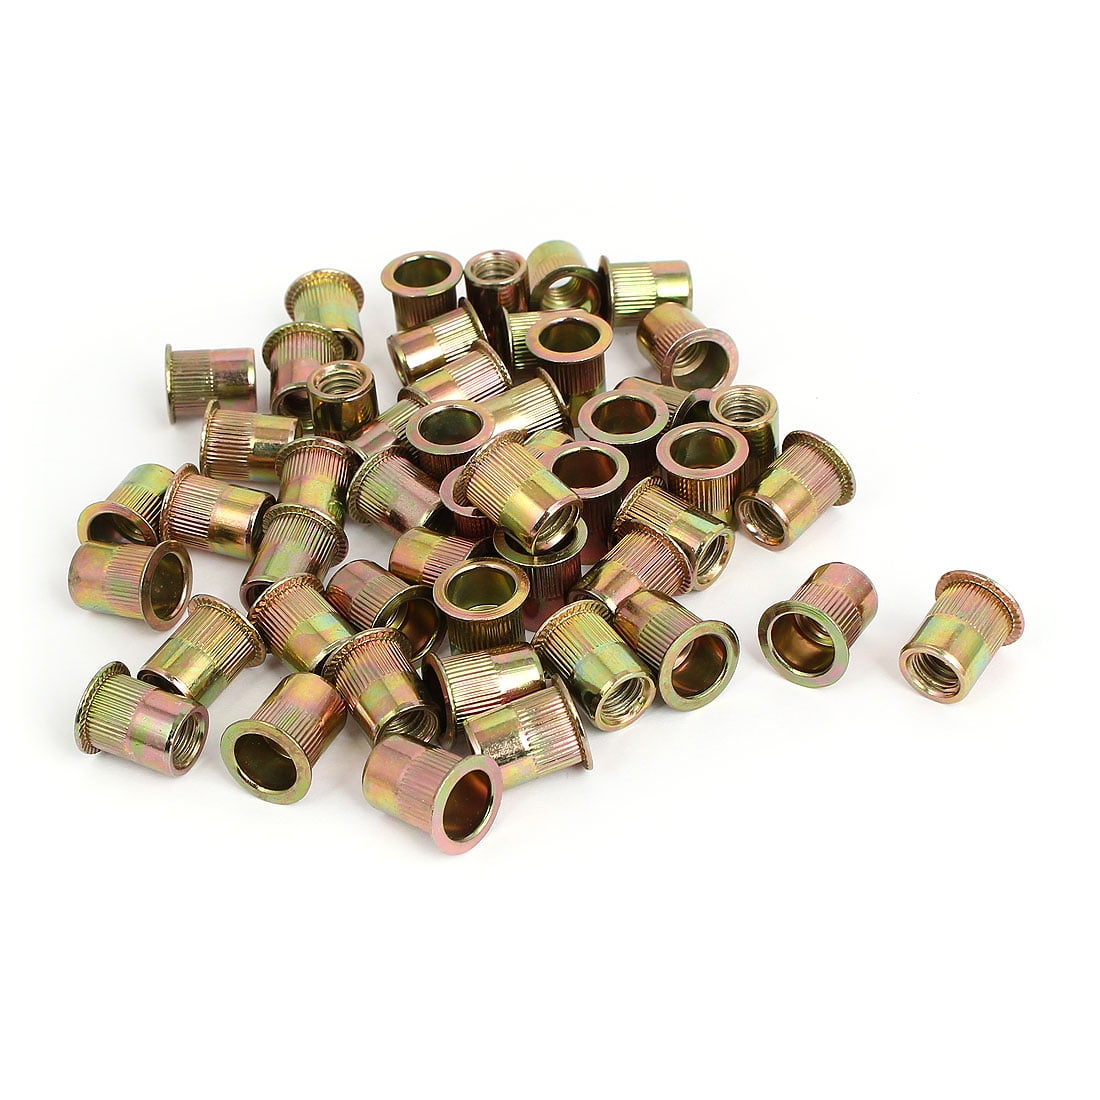 40Pcs Rivet Nuts Stainless Steel Threaded Insert Nut 1/4-20UNC Nutsert Flat Head 